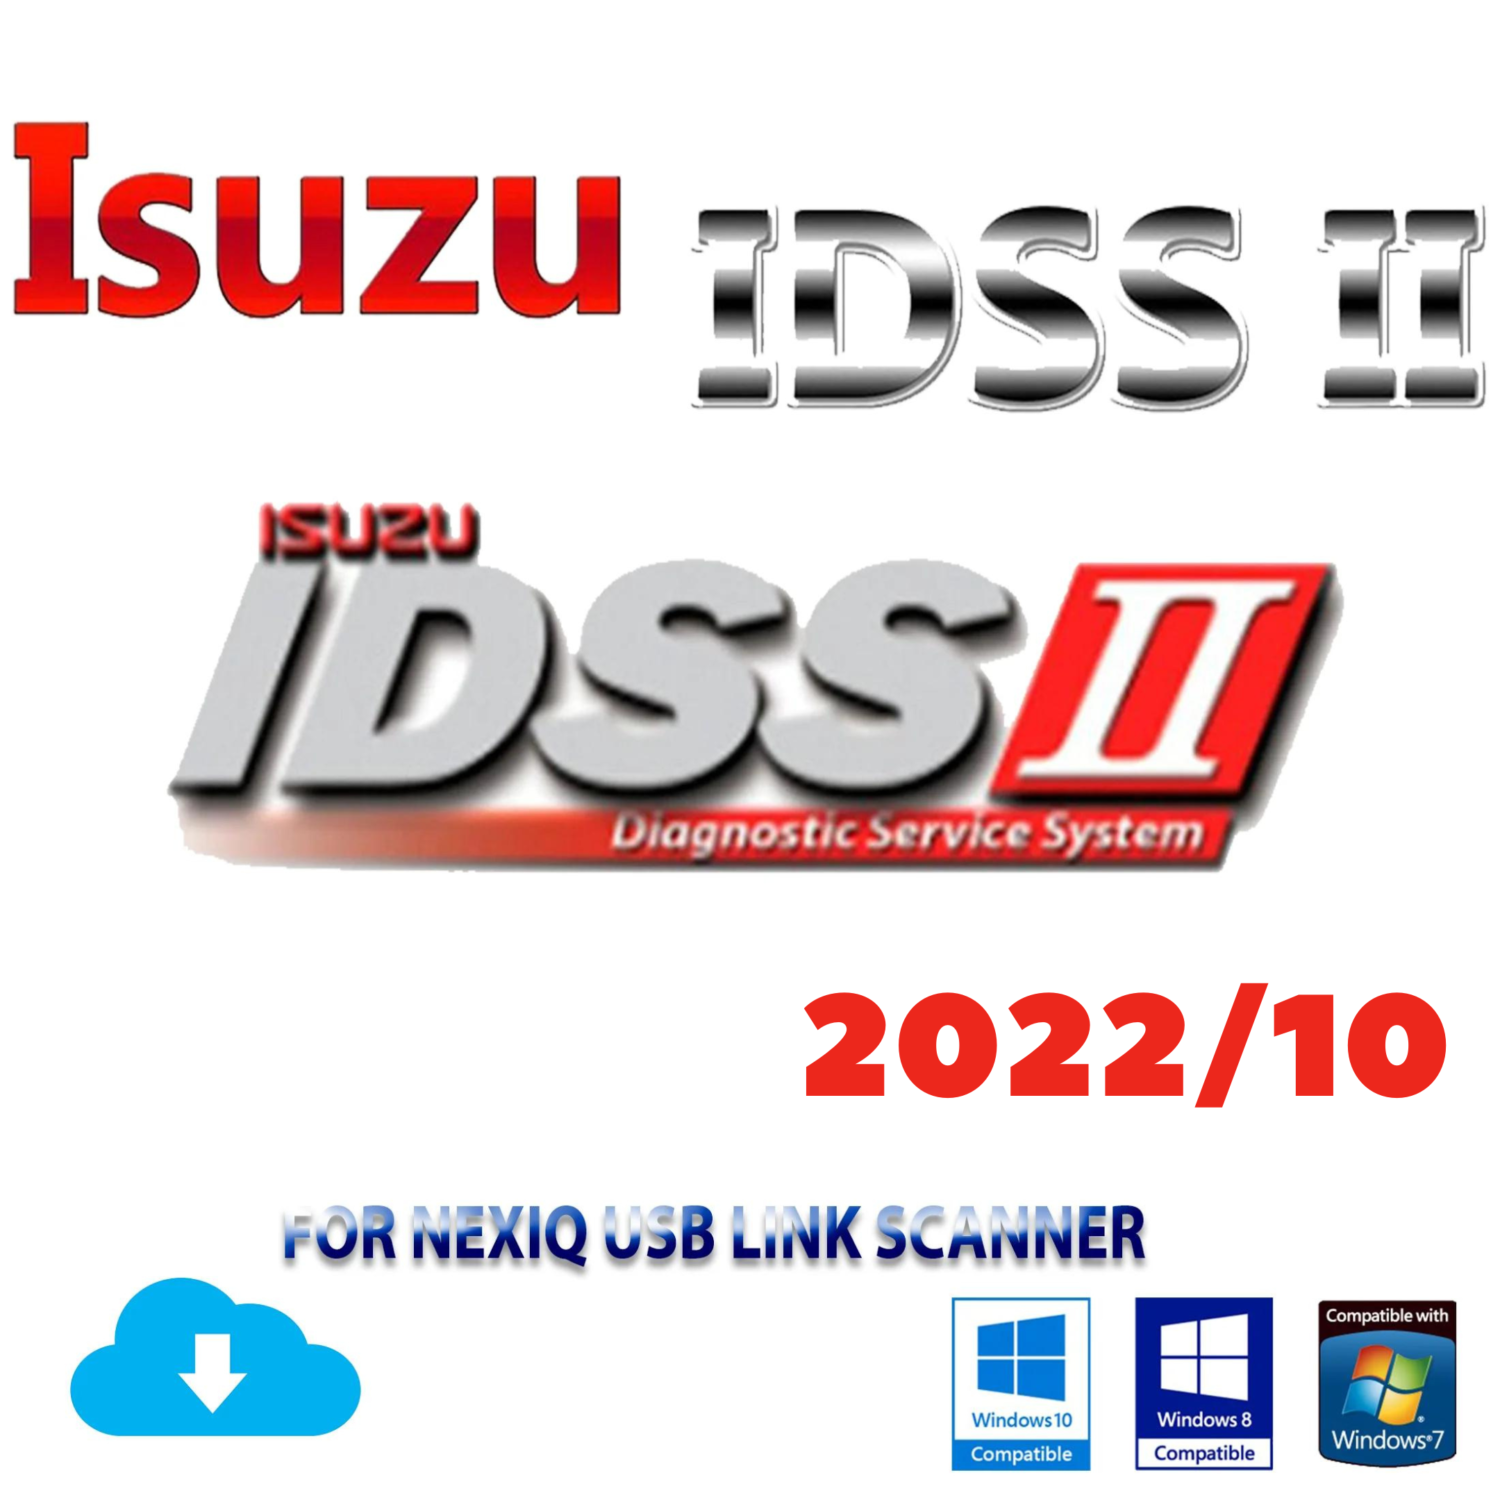 ISUZU US IDSS II 2022/12 Diagnose-Service-System für Nexiq USB Link